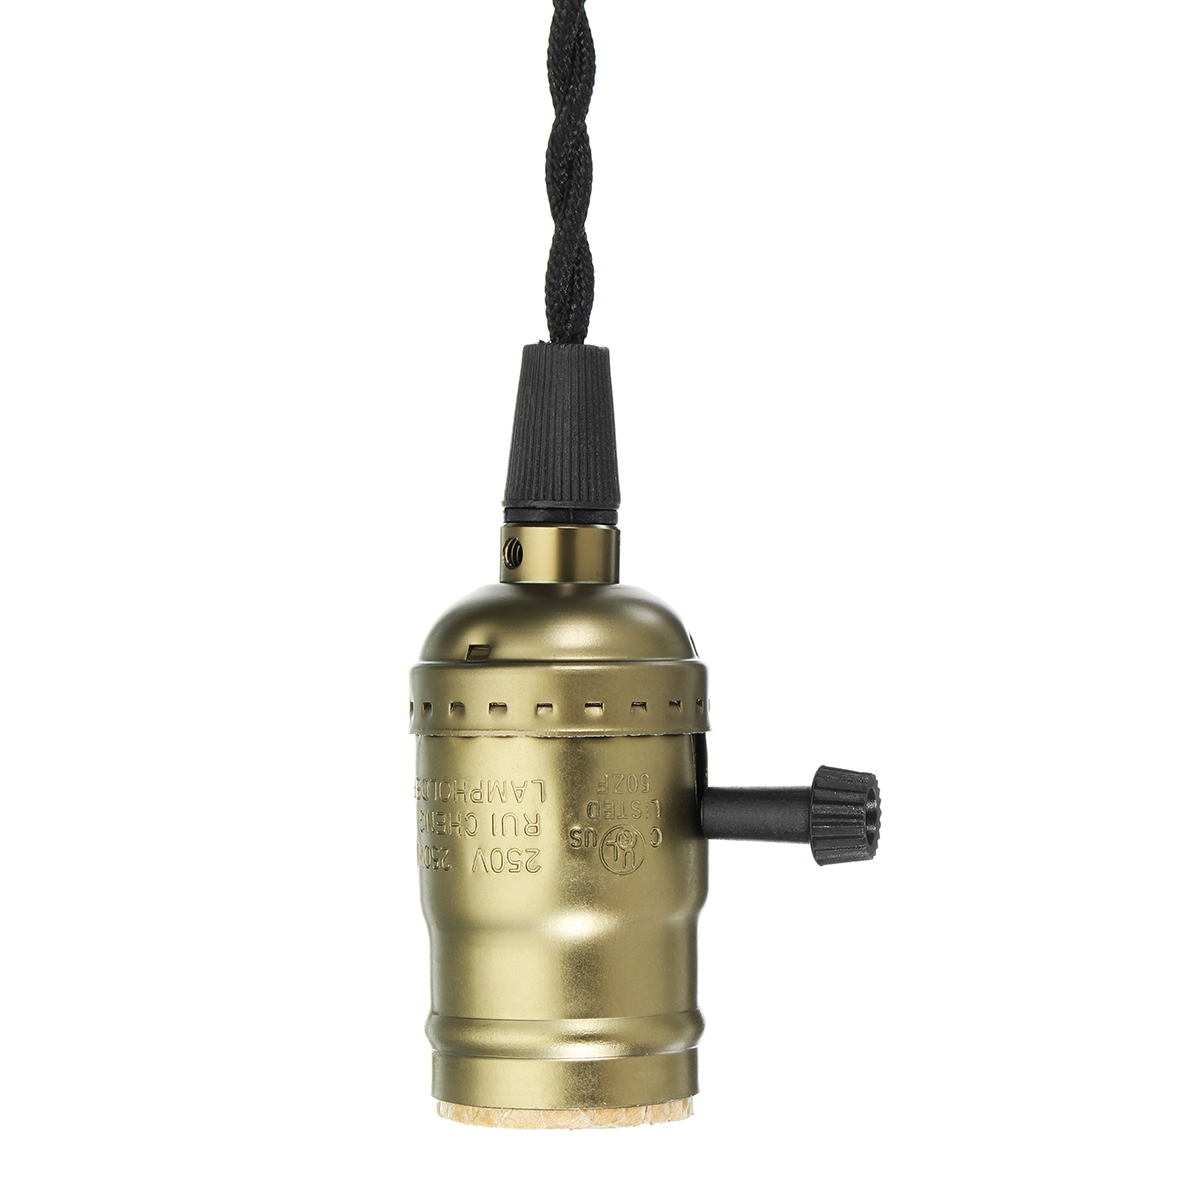 E27-4M-Vintage-Copper-Bulb-Adapter-Base-Socket-Lamp-Holder-with-Dimmer-Switch-US-Plug-1287282-3